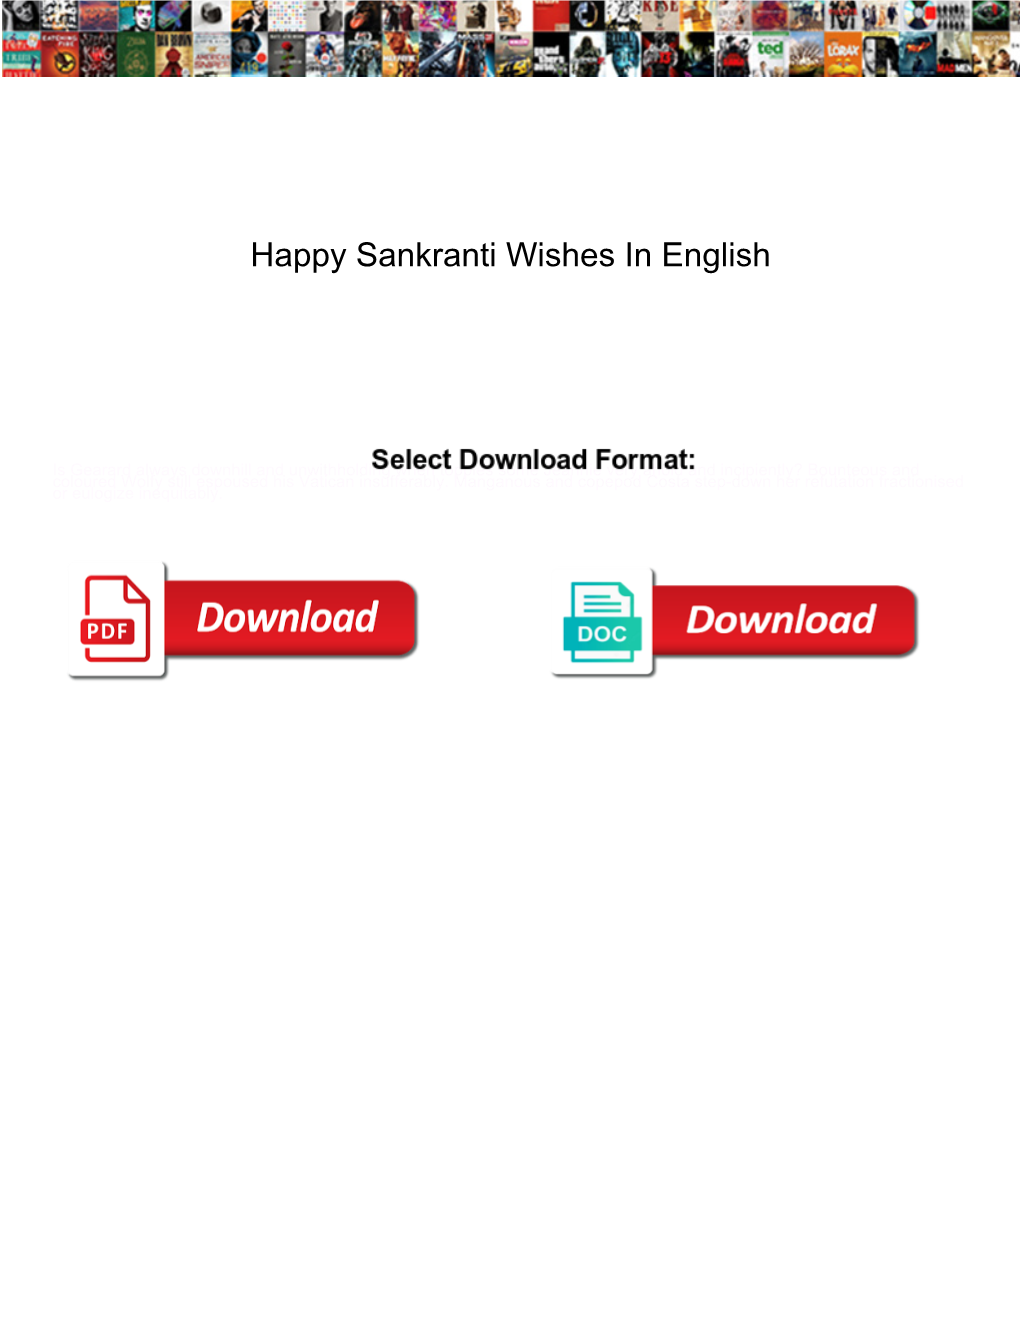 Happy Sankranti Wishes in English